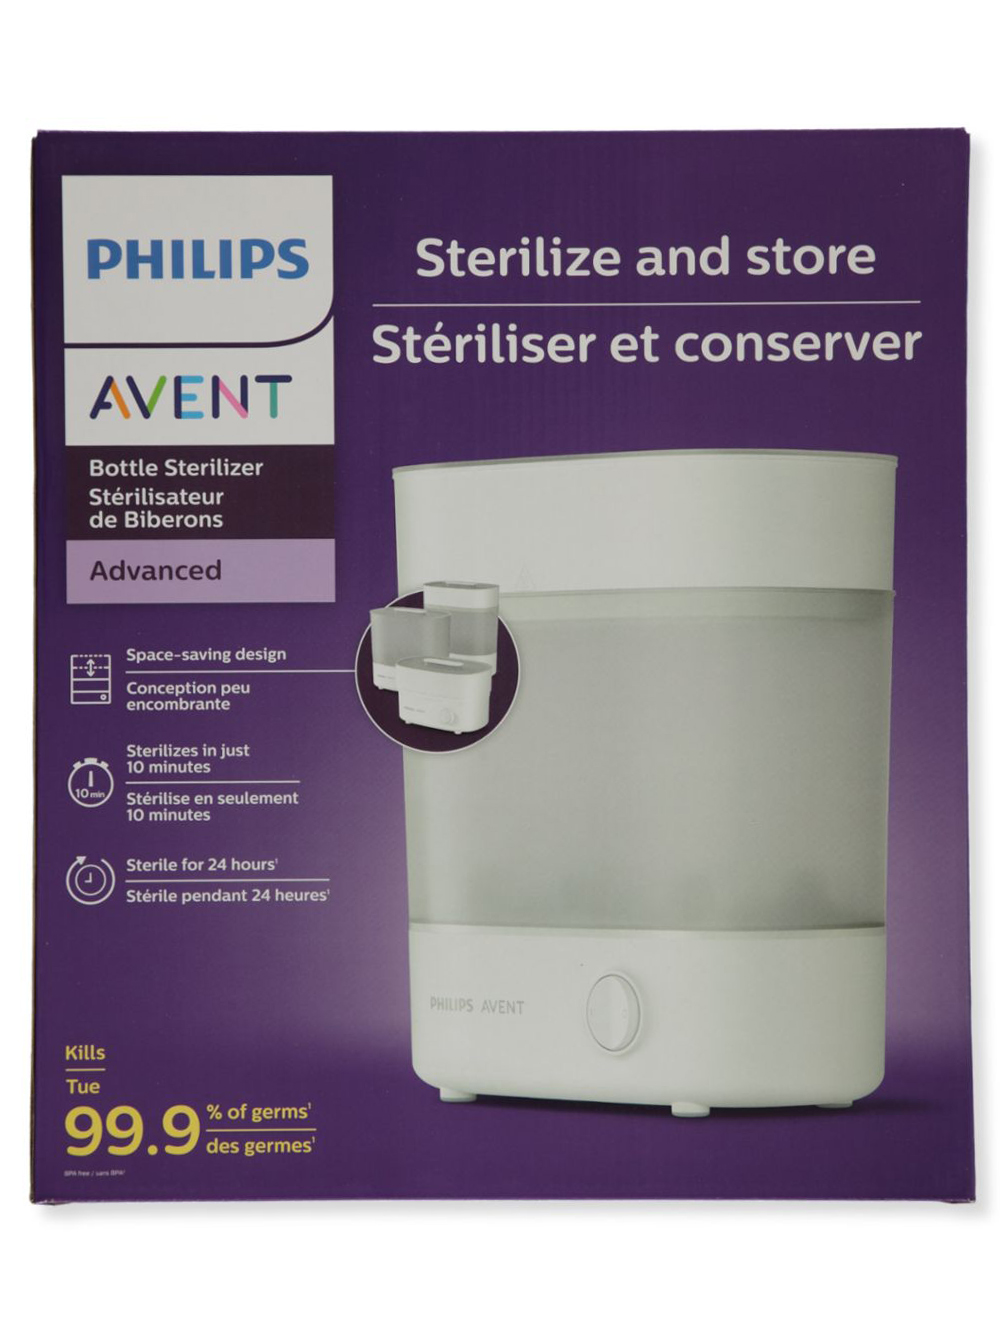 Steam Sterilizer  Philips Avent 3-in-1 Electric Steam Sterilizer 